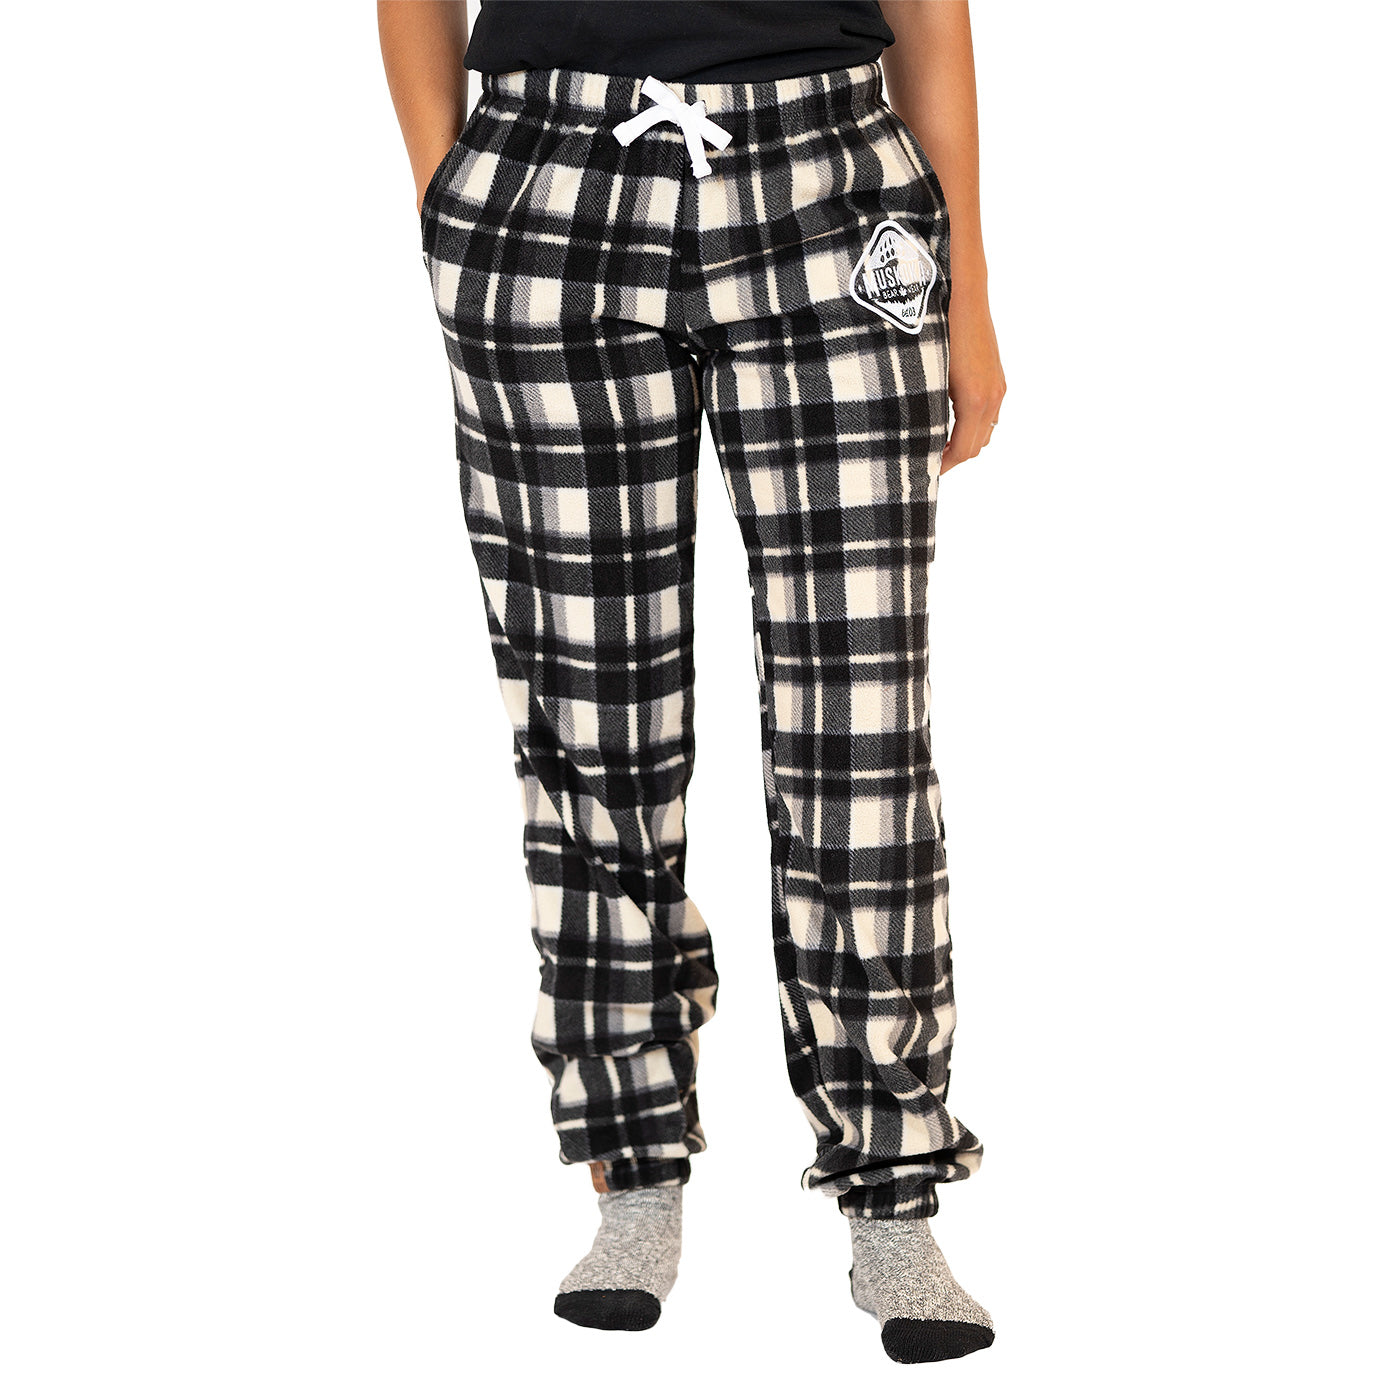 Maroon/Grey Plaid Pajama Pant